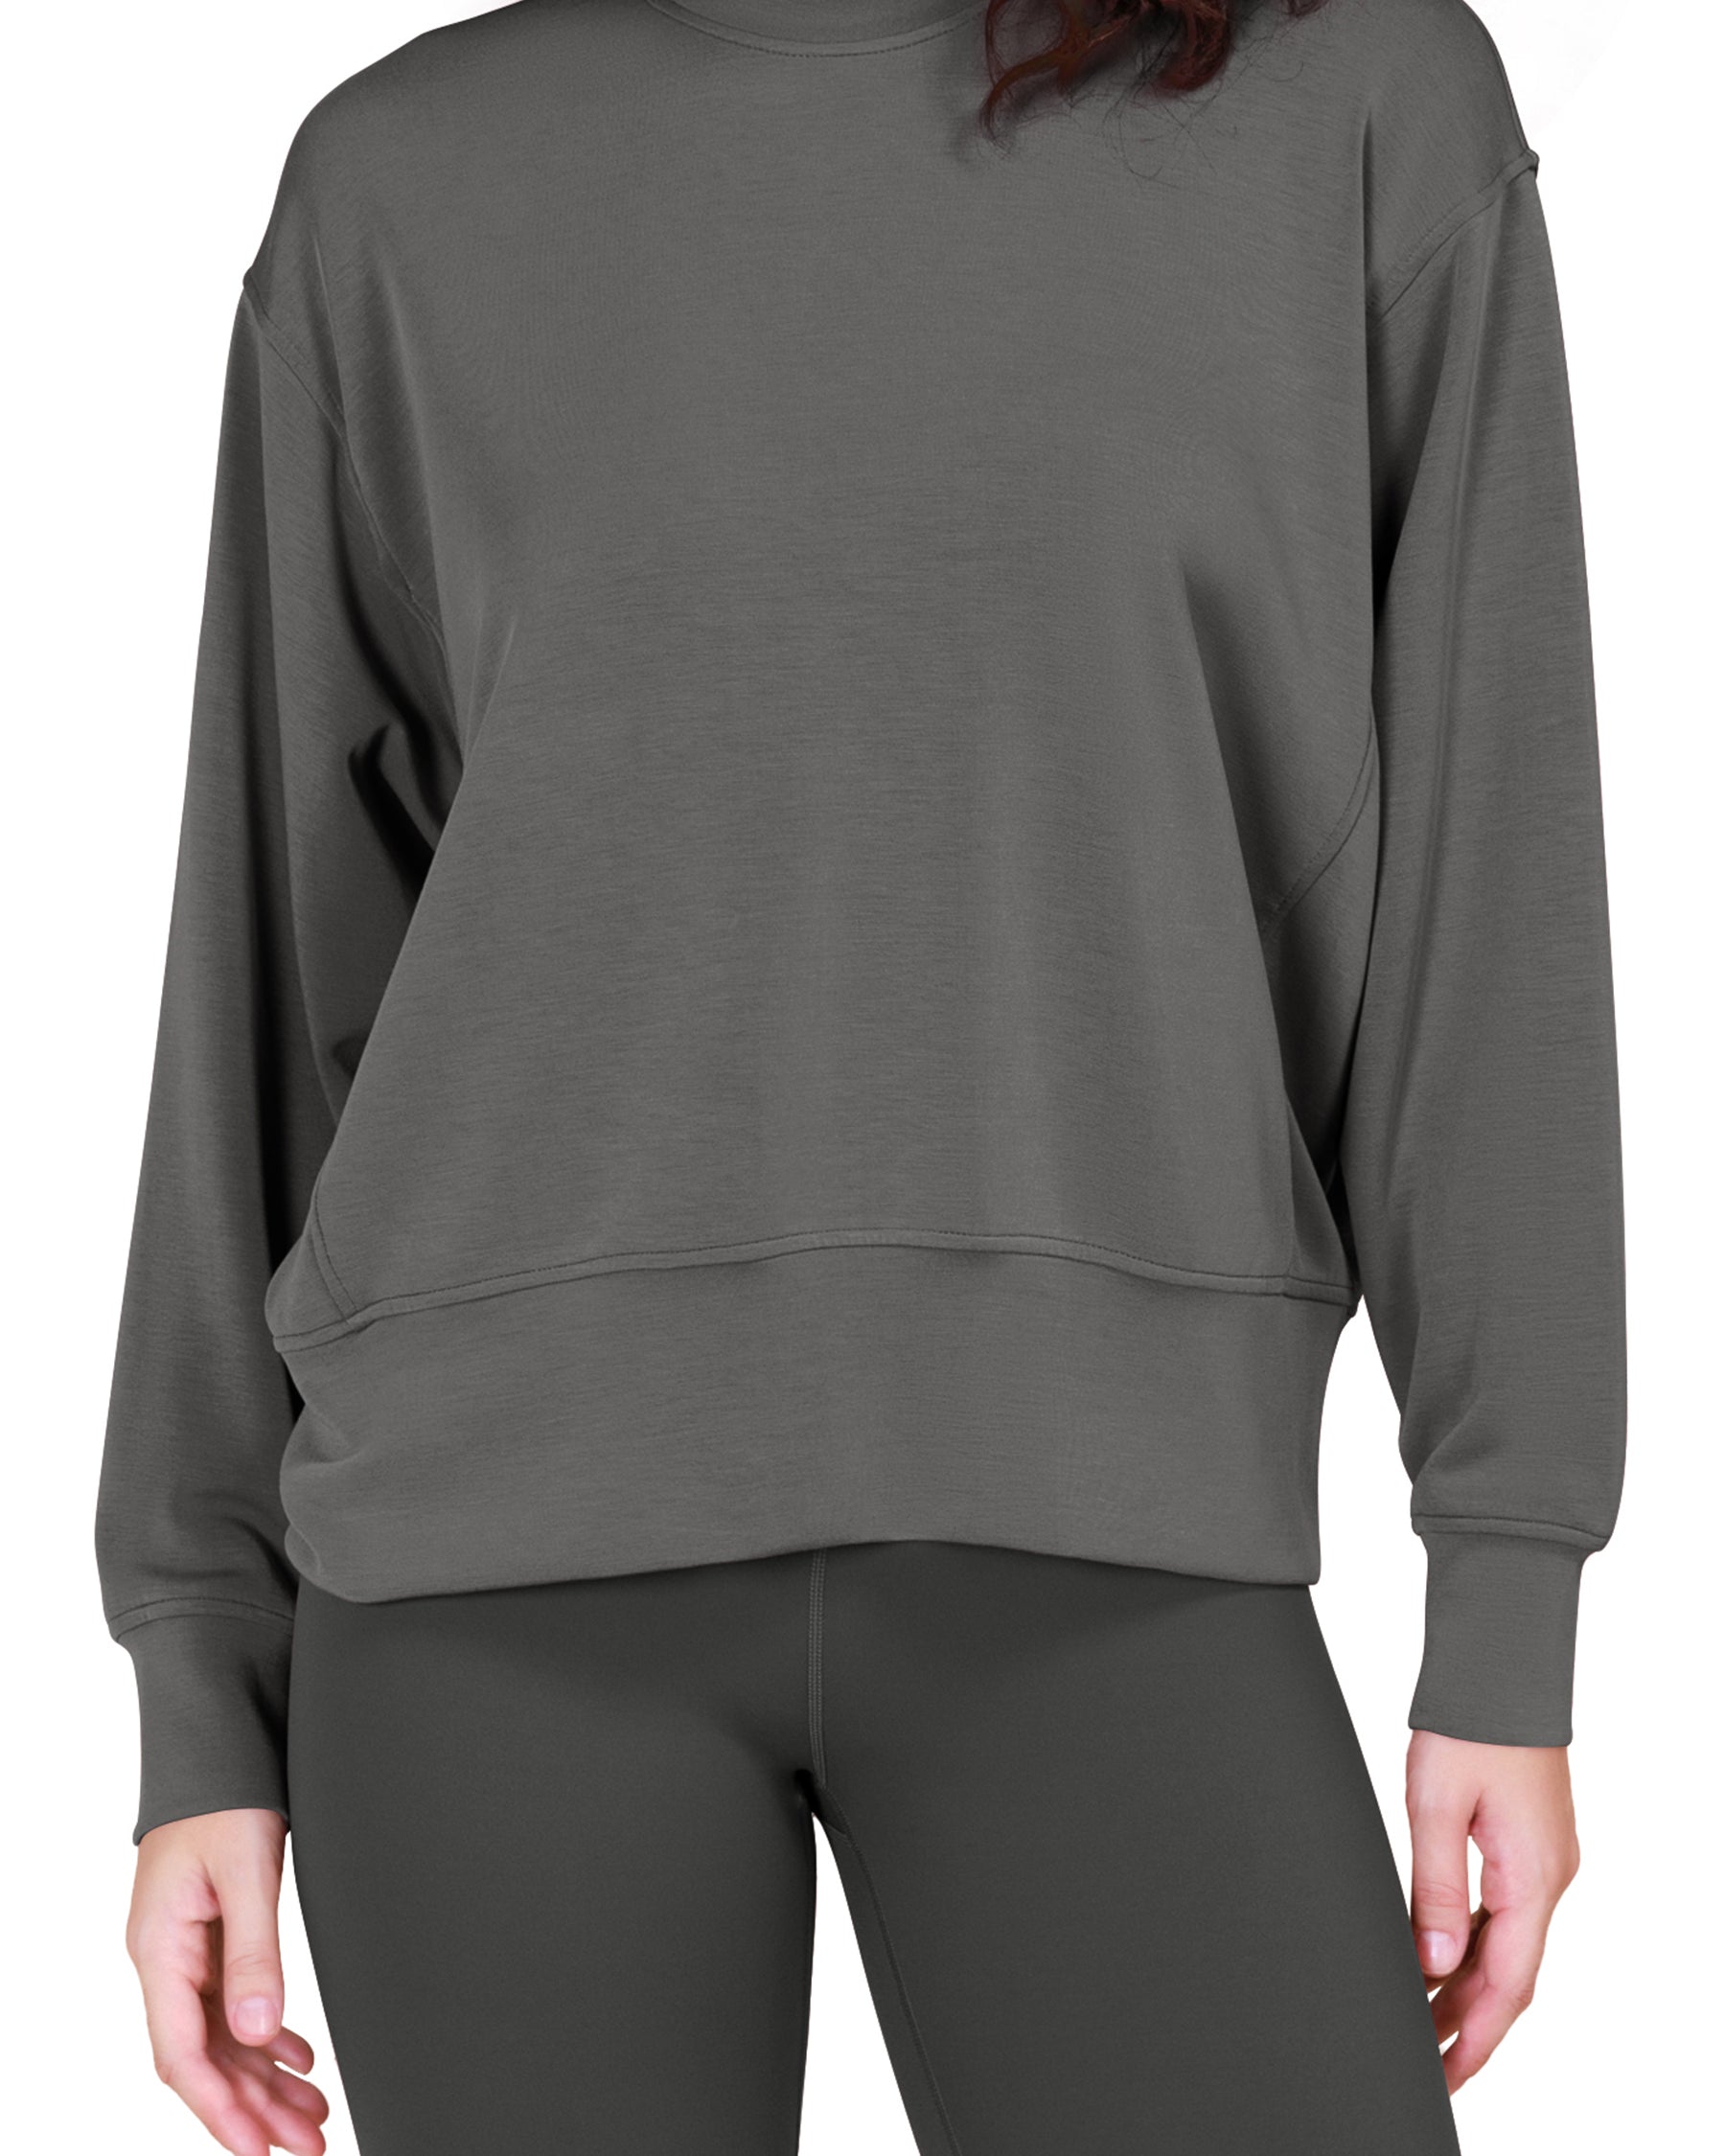 Modal Soft Long Sleeve Oversized Sweatshirts Charcoal - ododos